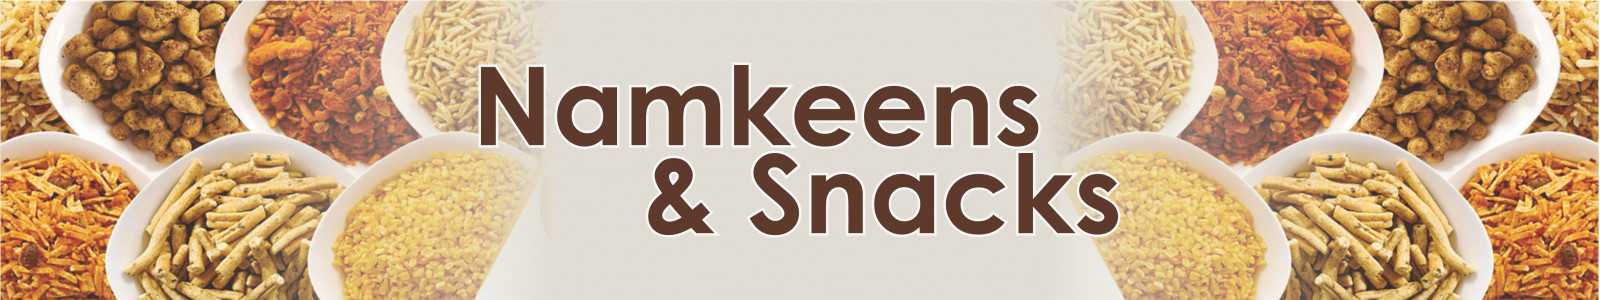 Namkeens & Snacks